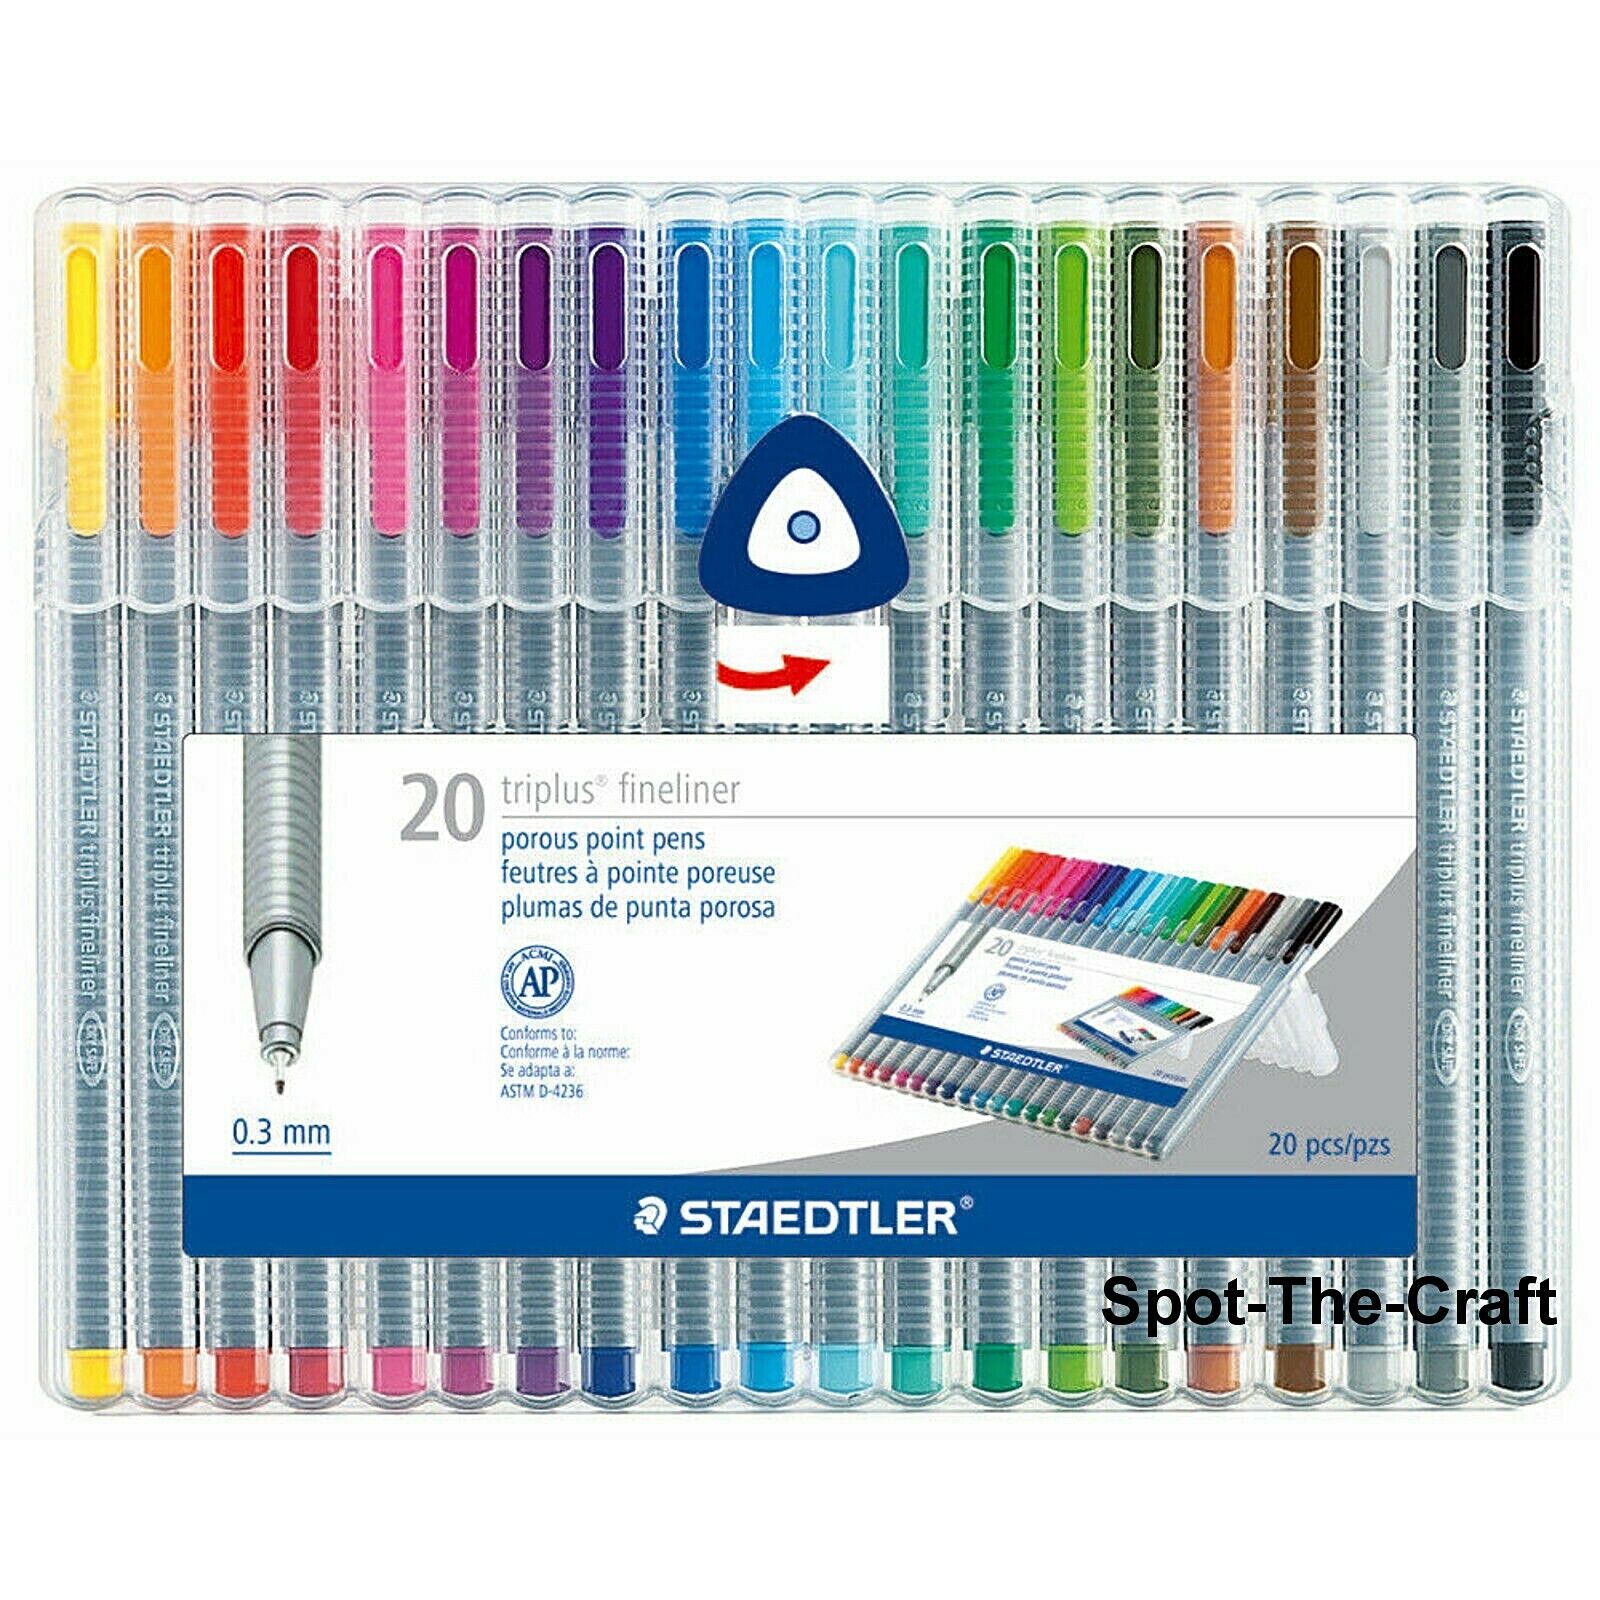 Staedtler Triplus Fineliner Pens 20 Brilliant Colors 0.3mm 334 SB20A604